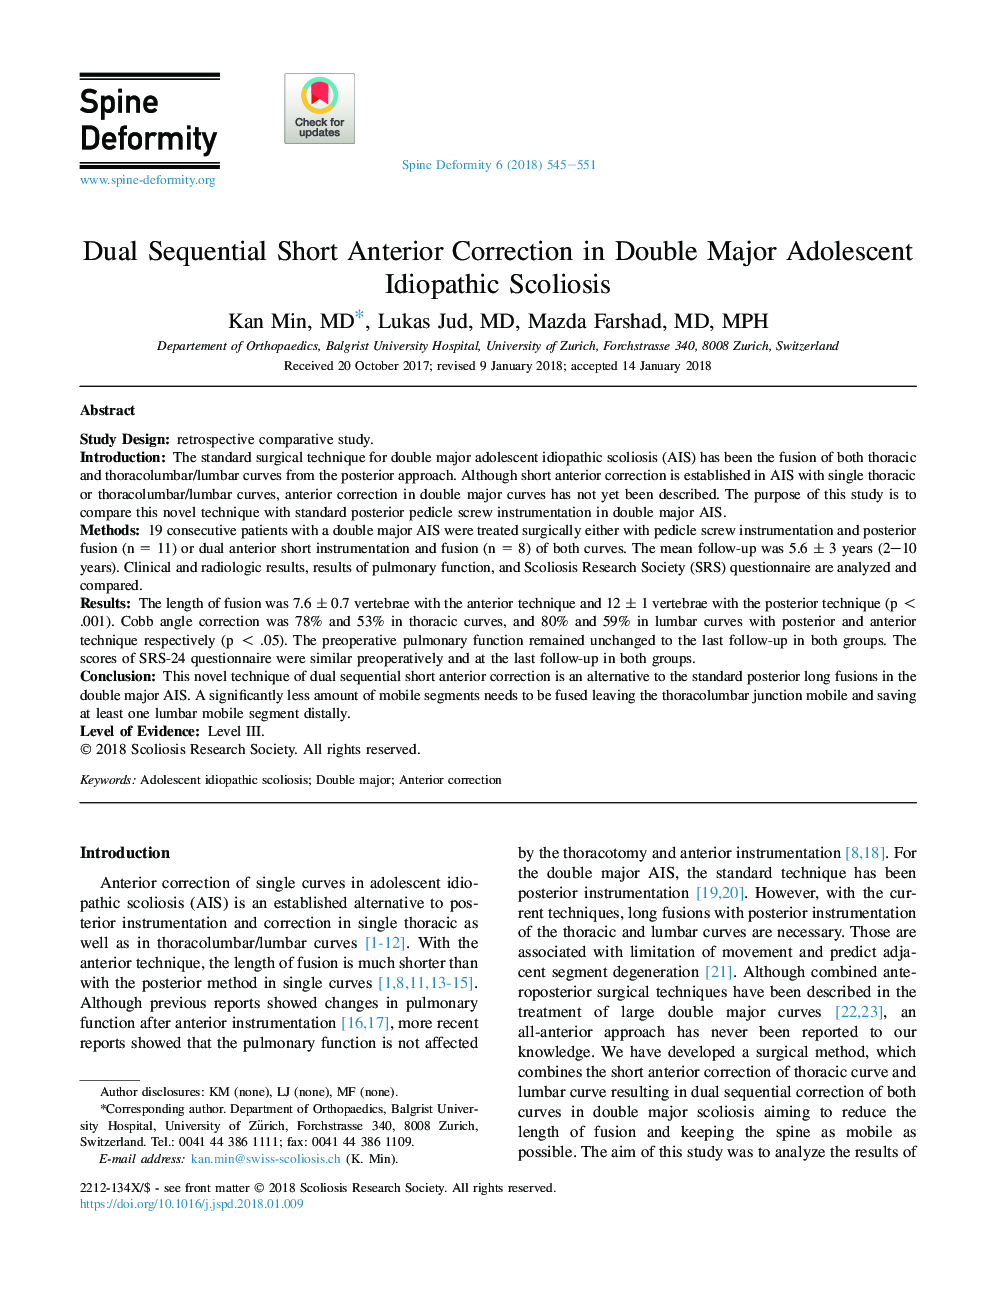 Dual Sequential Short Anterior Correction in Double Major Adolescent Idiopathic Scoliosis